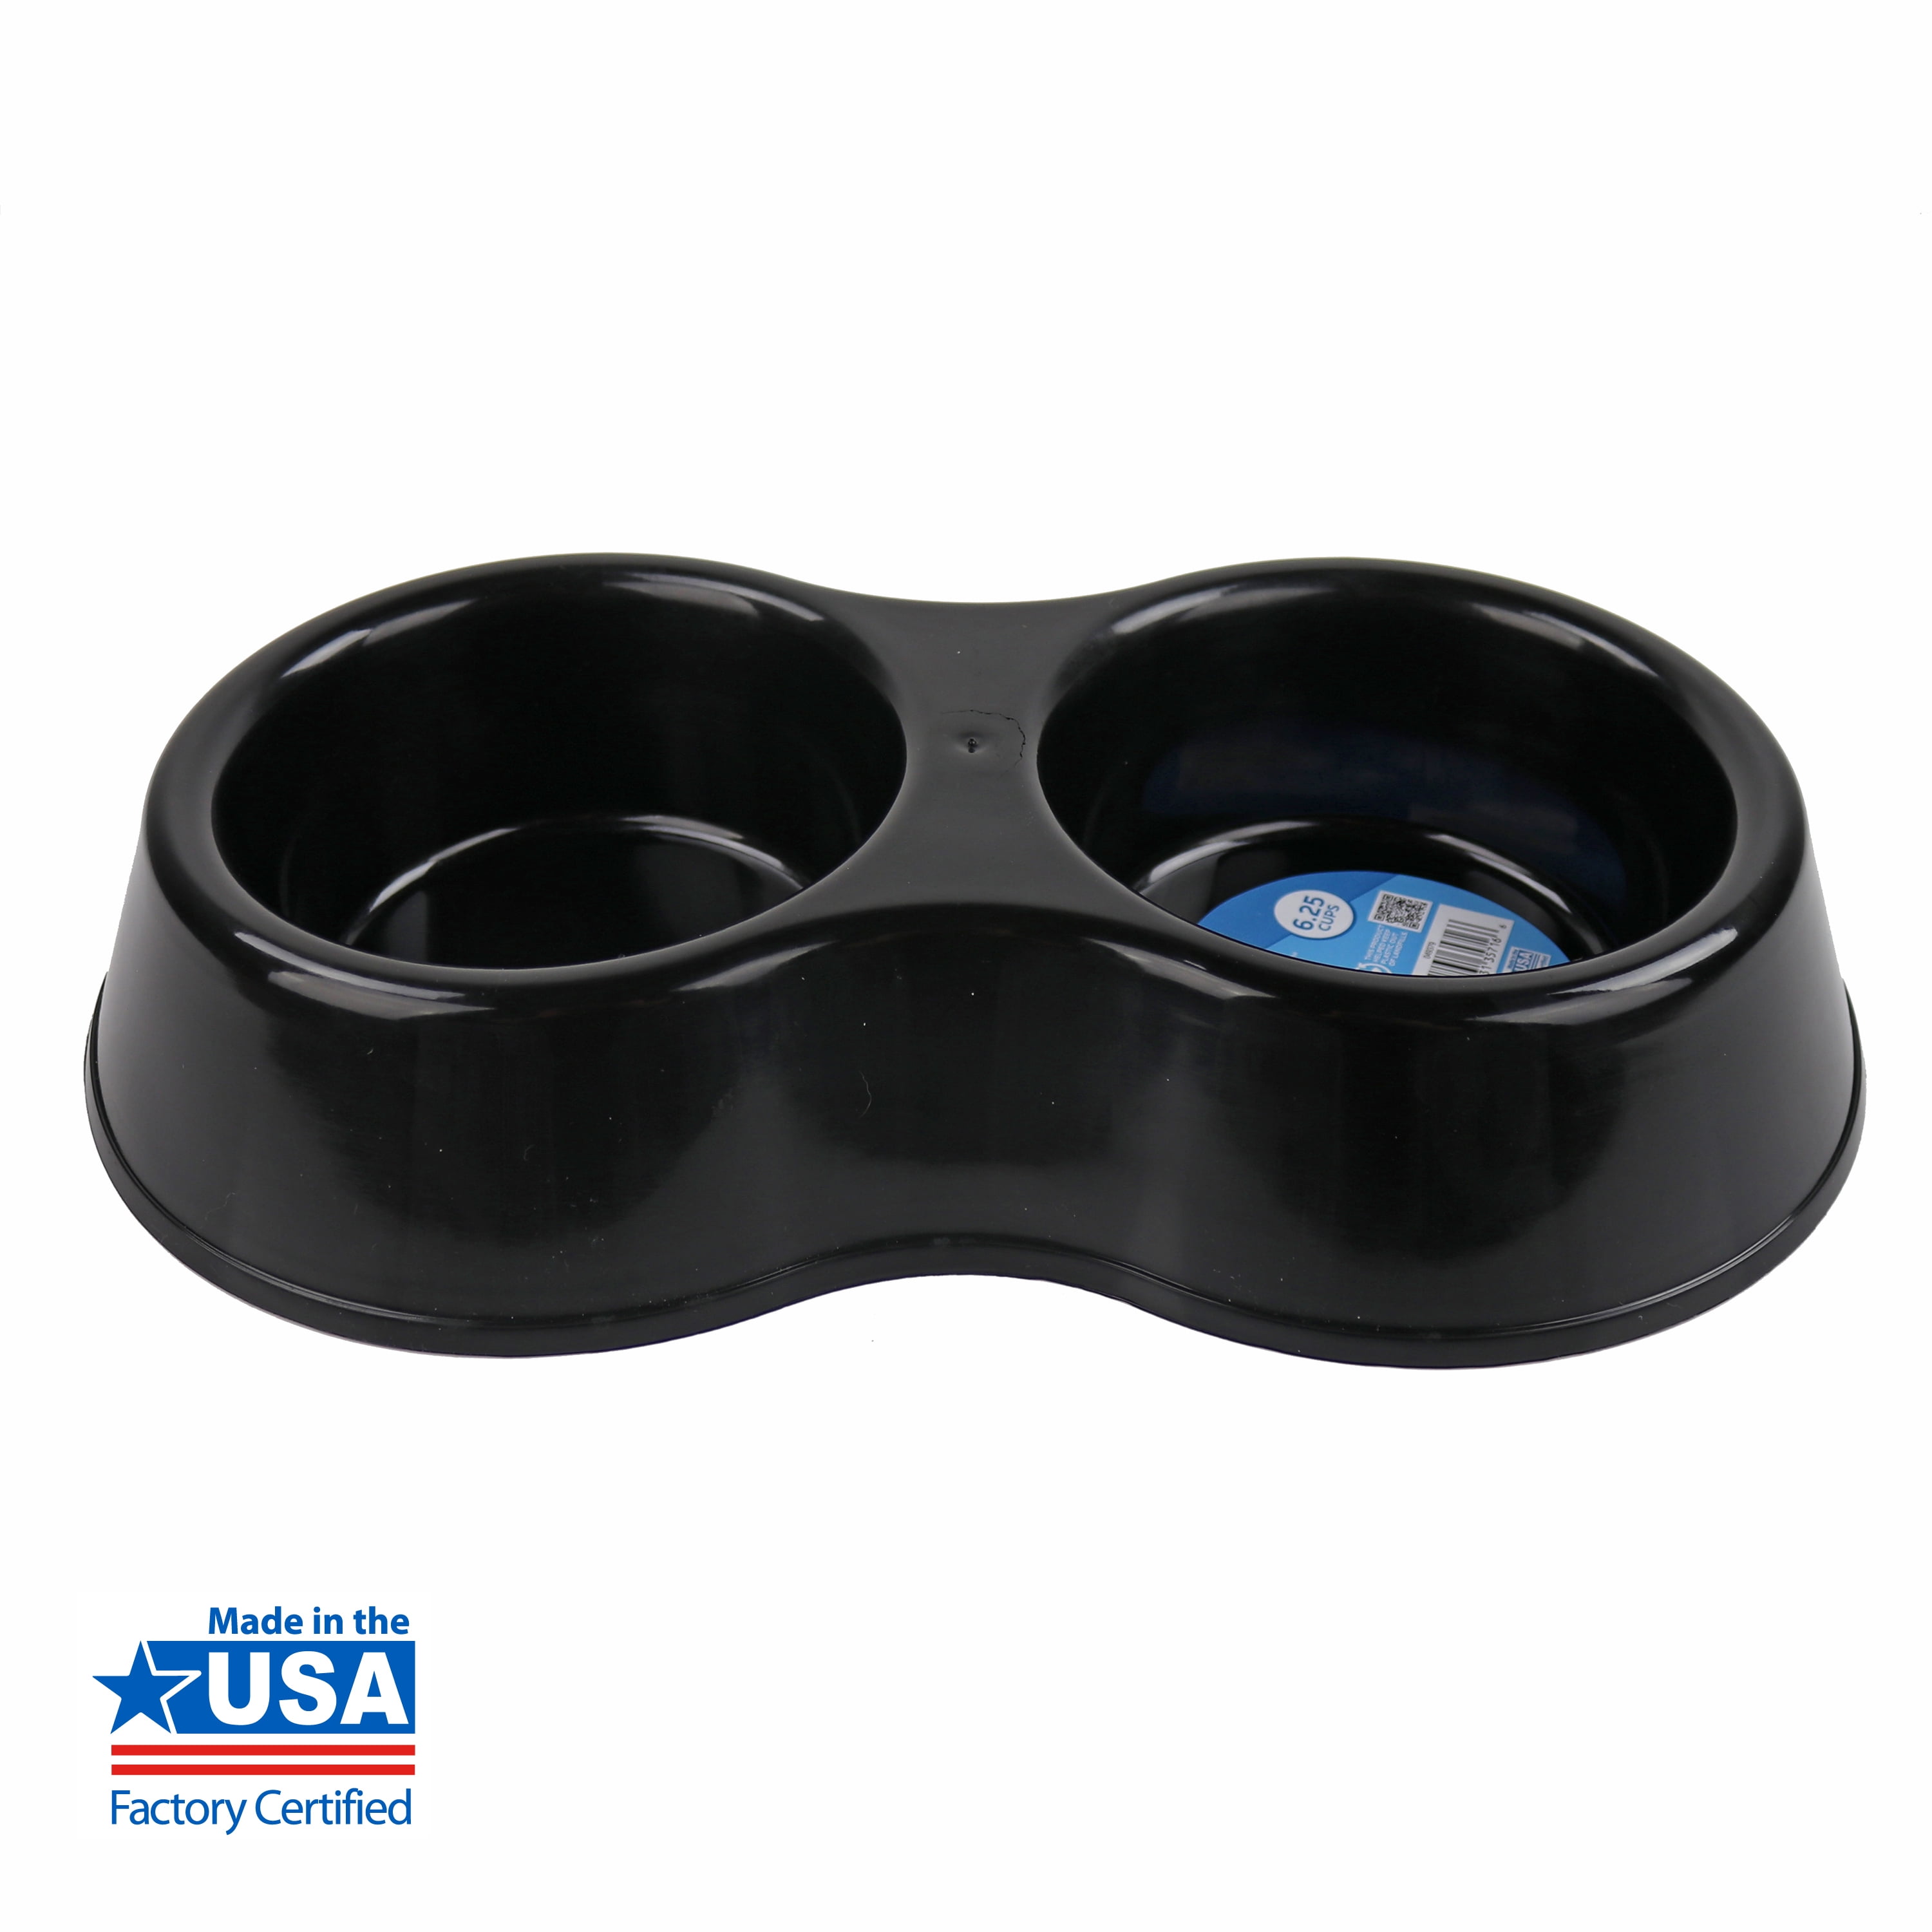 Black Rhino Dura-Bowl Aqua (64 Oz)  Dog Bowls for All Sizes, 64 Oz - Pay  Less Super Markets